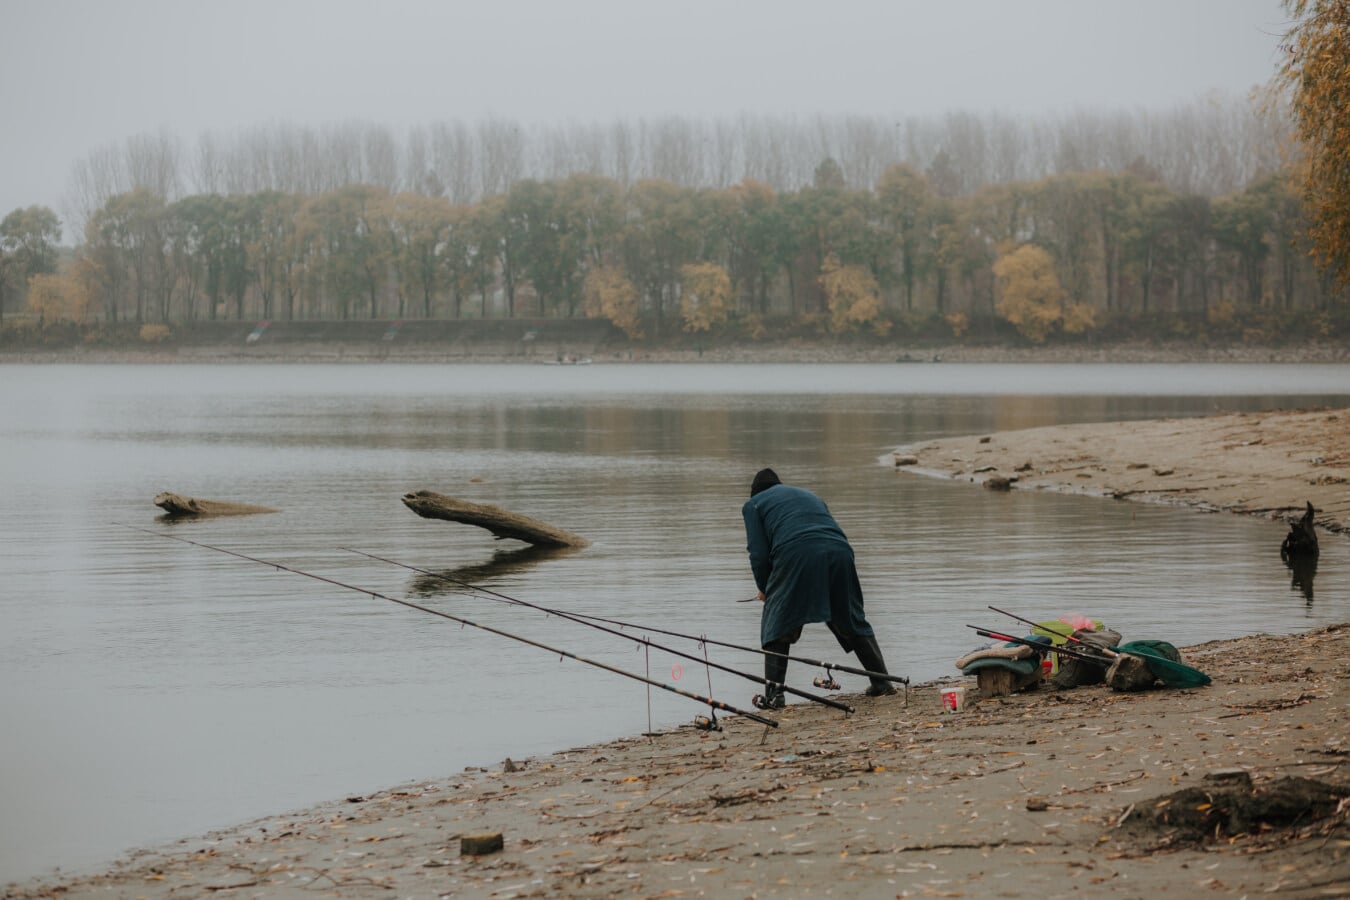 fishing gear, fishing rod, riverbank, morning, autumn season, foggy, water, river, fisherman, landscape